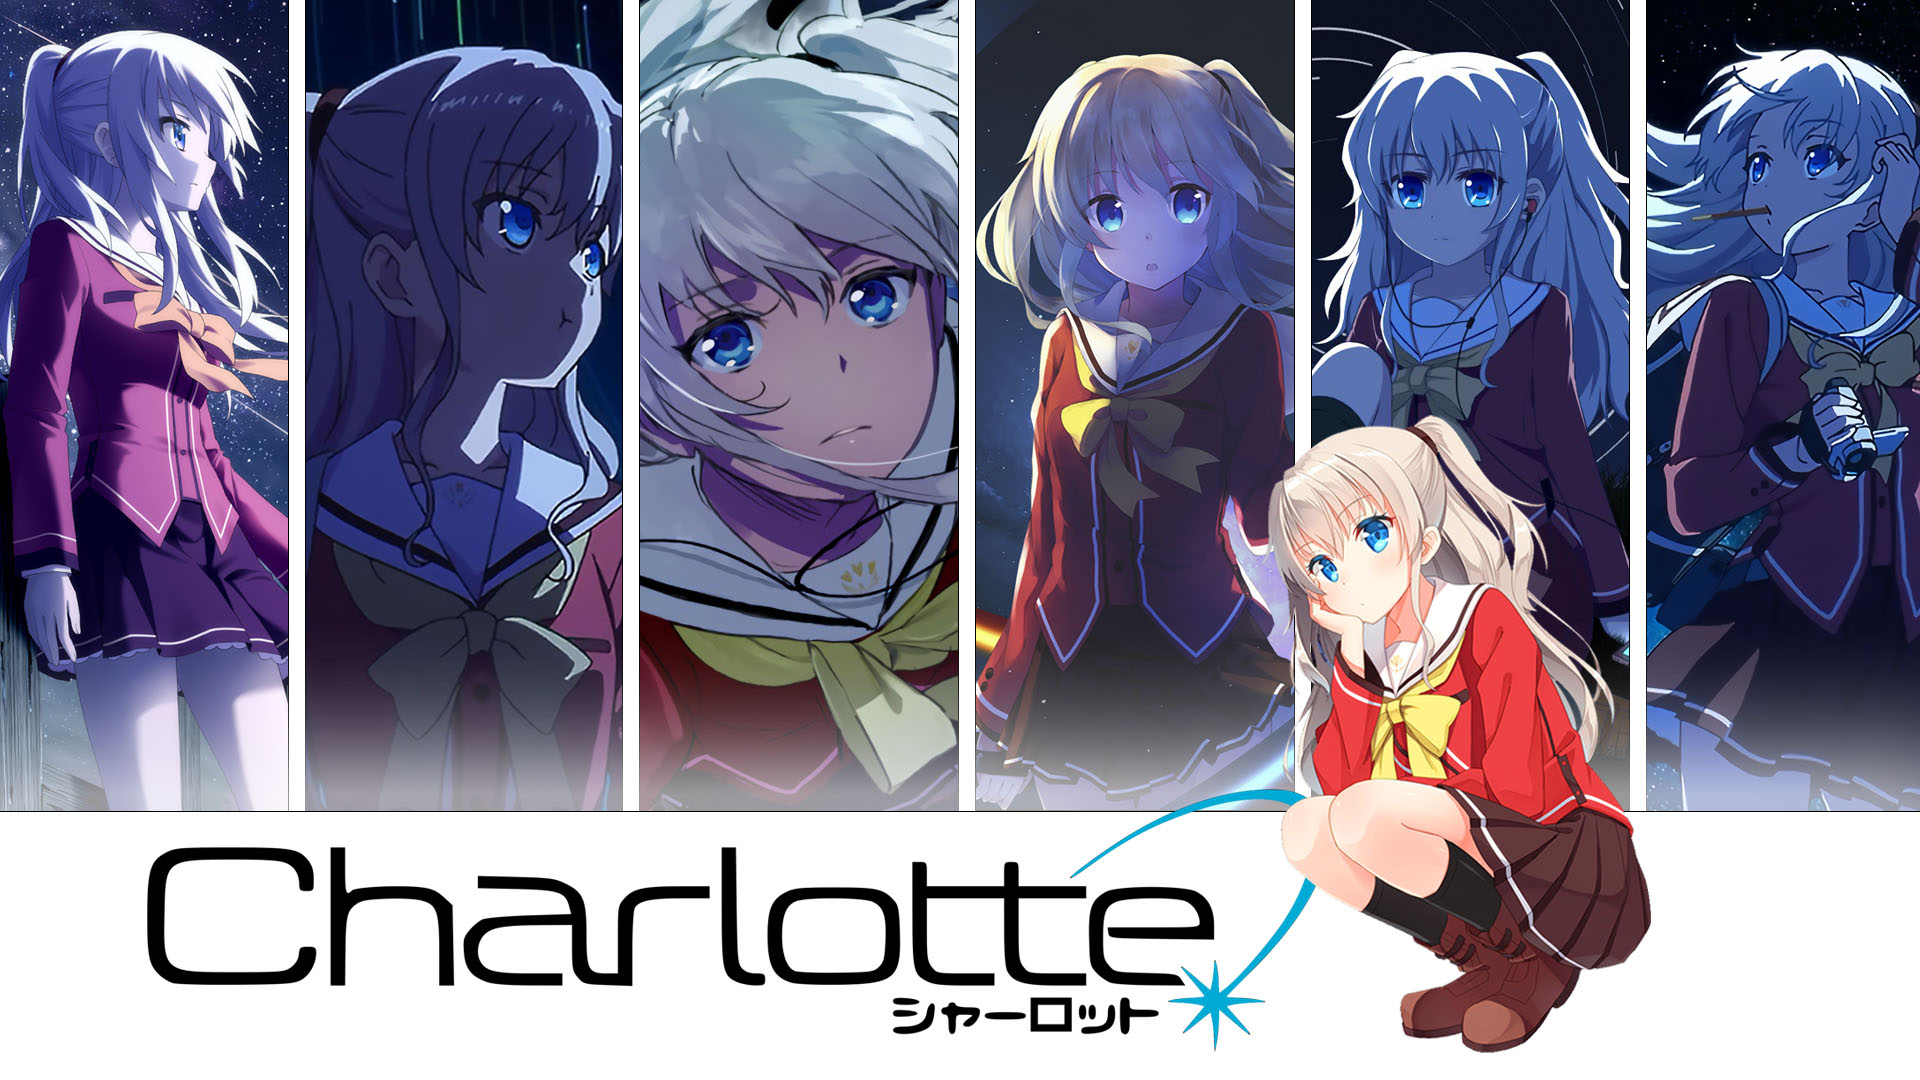 I love sad anime. No spoilers; is the anime, Charlotte, sad? - Quora